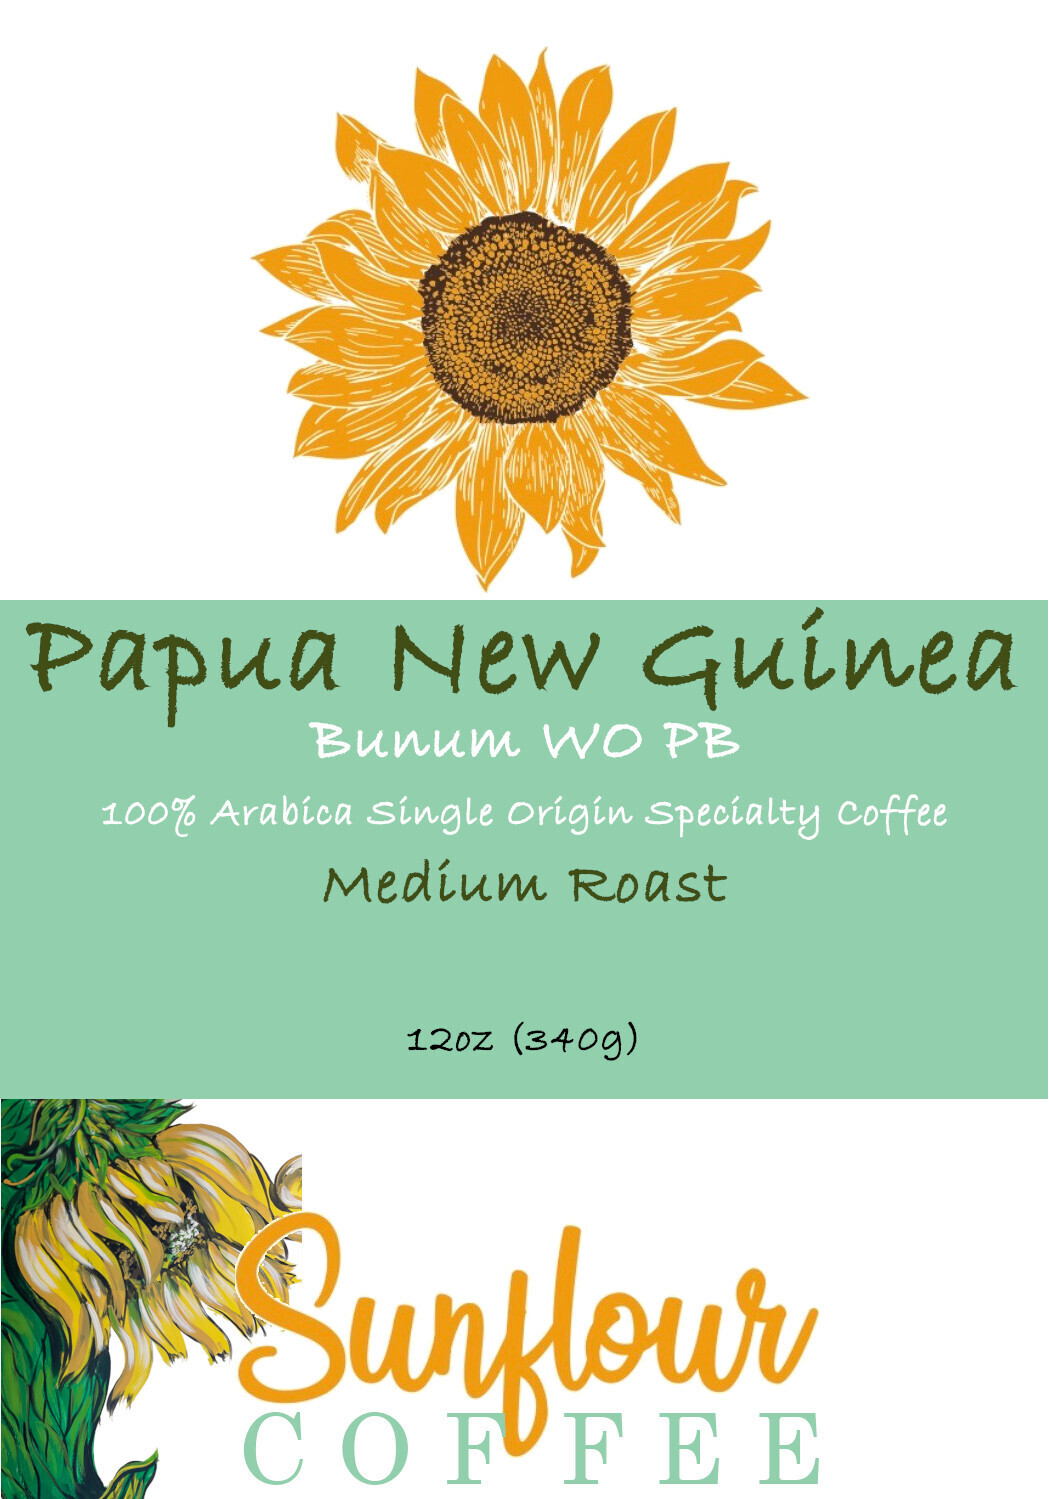 Papua New Guinea Bunum WO PB